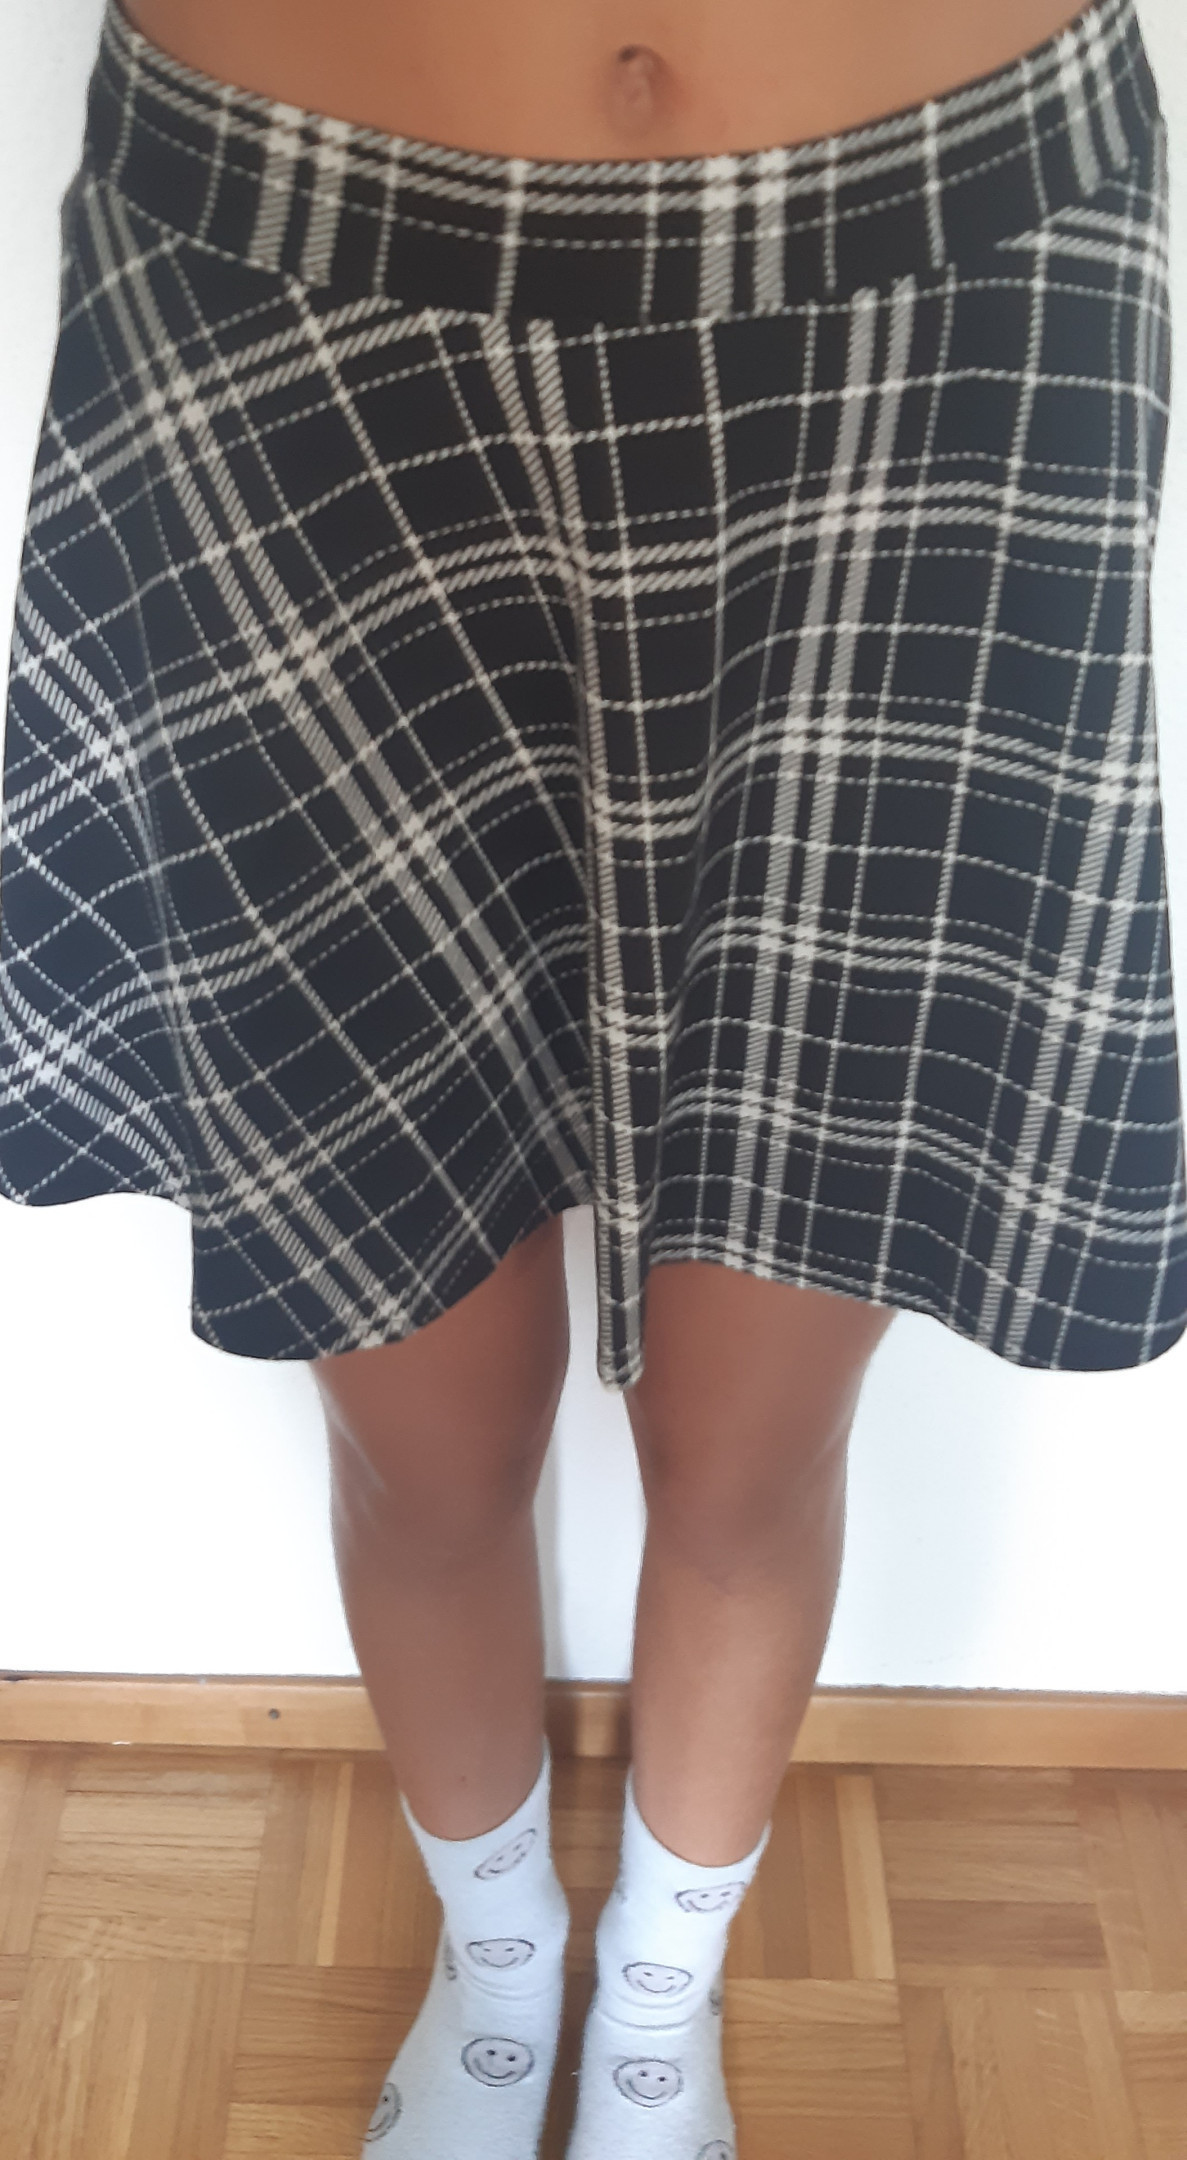 Checked skirt